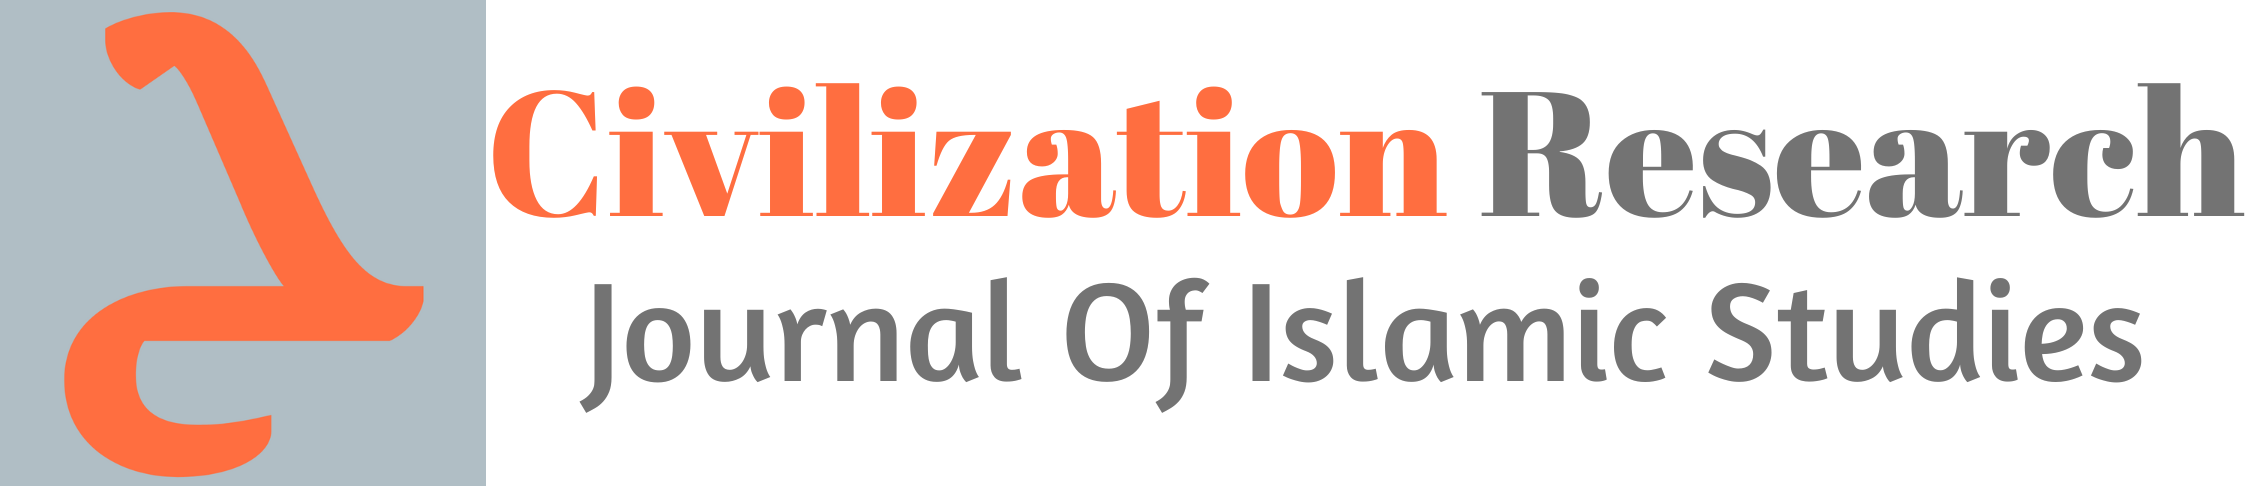 research paper about islamic civilization